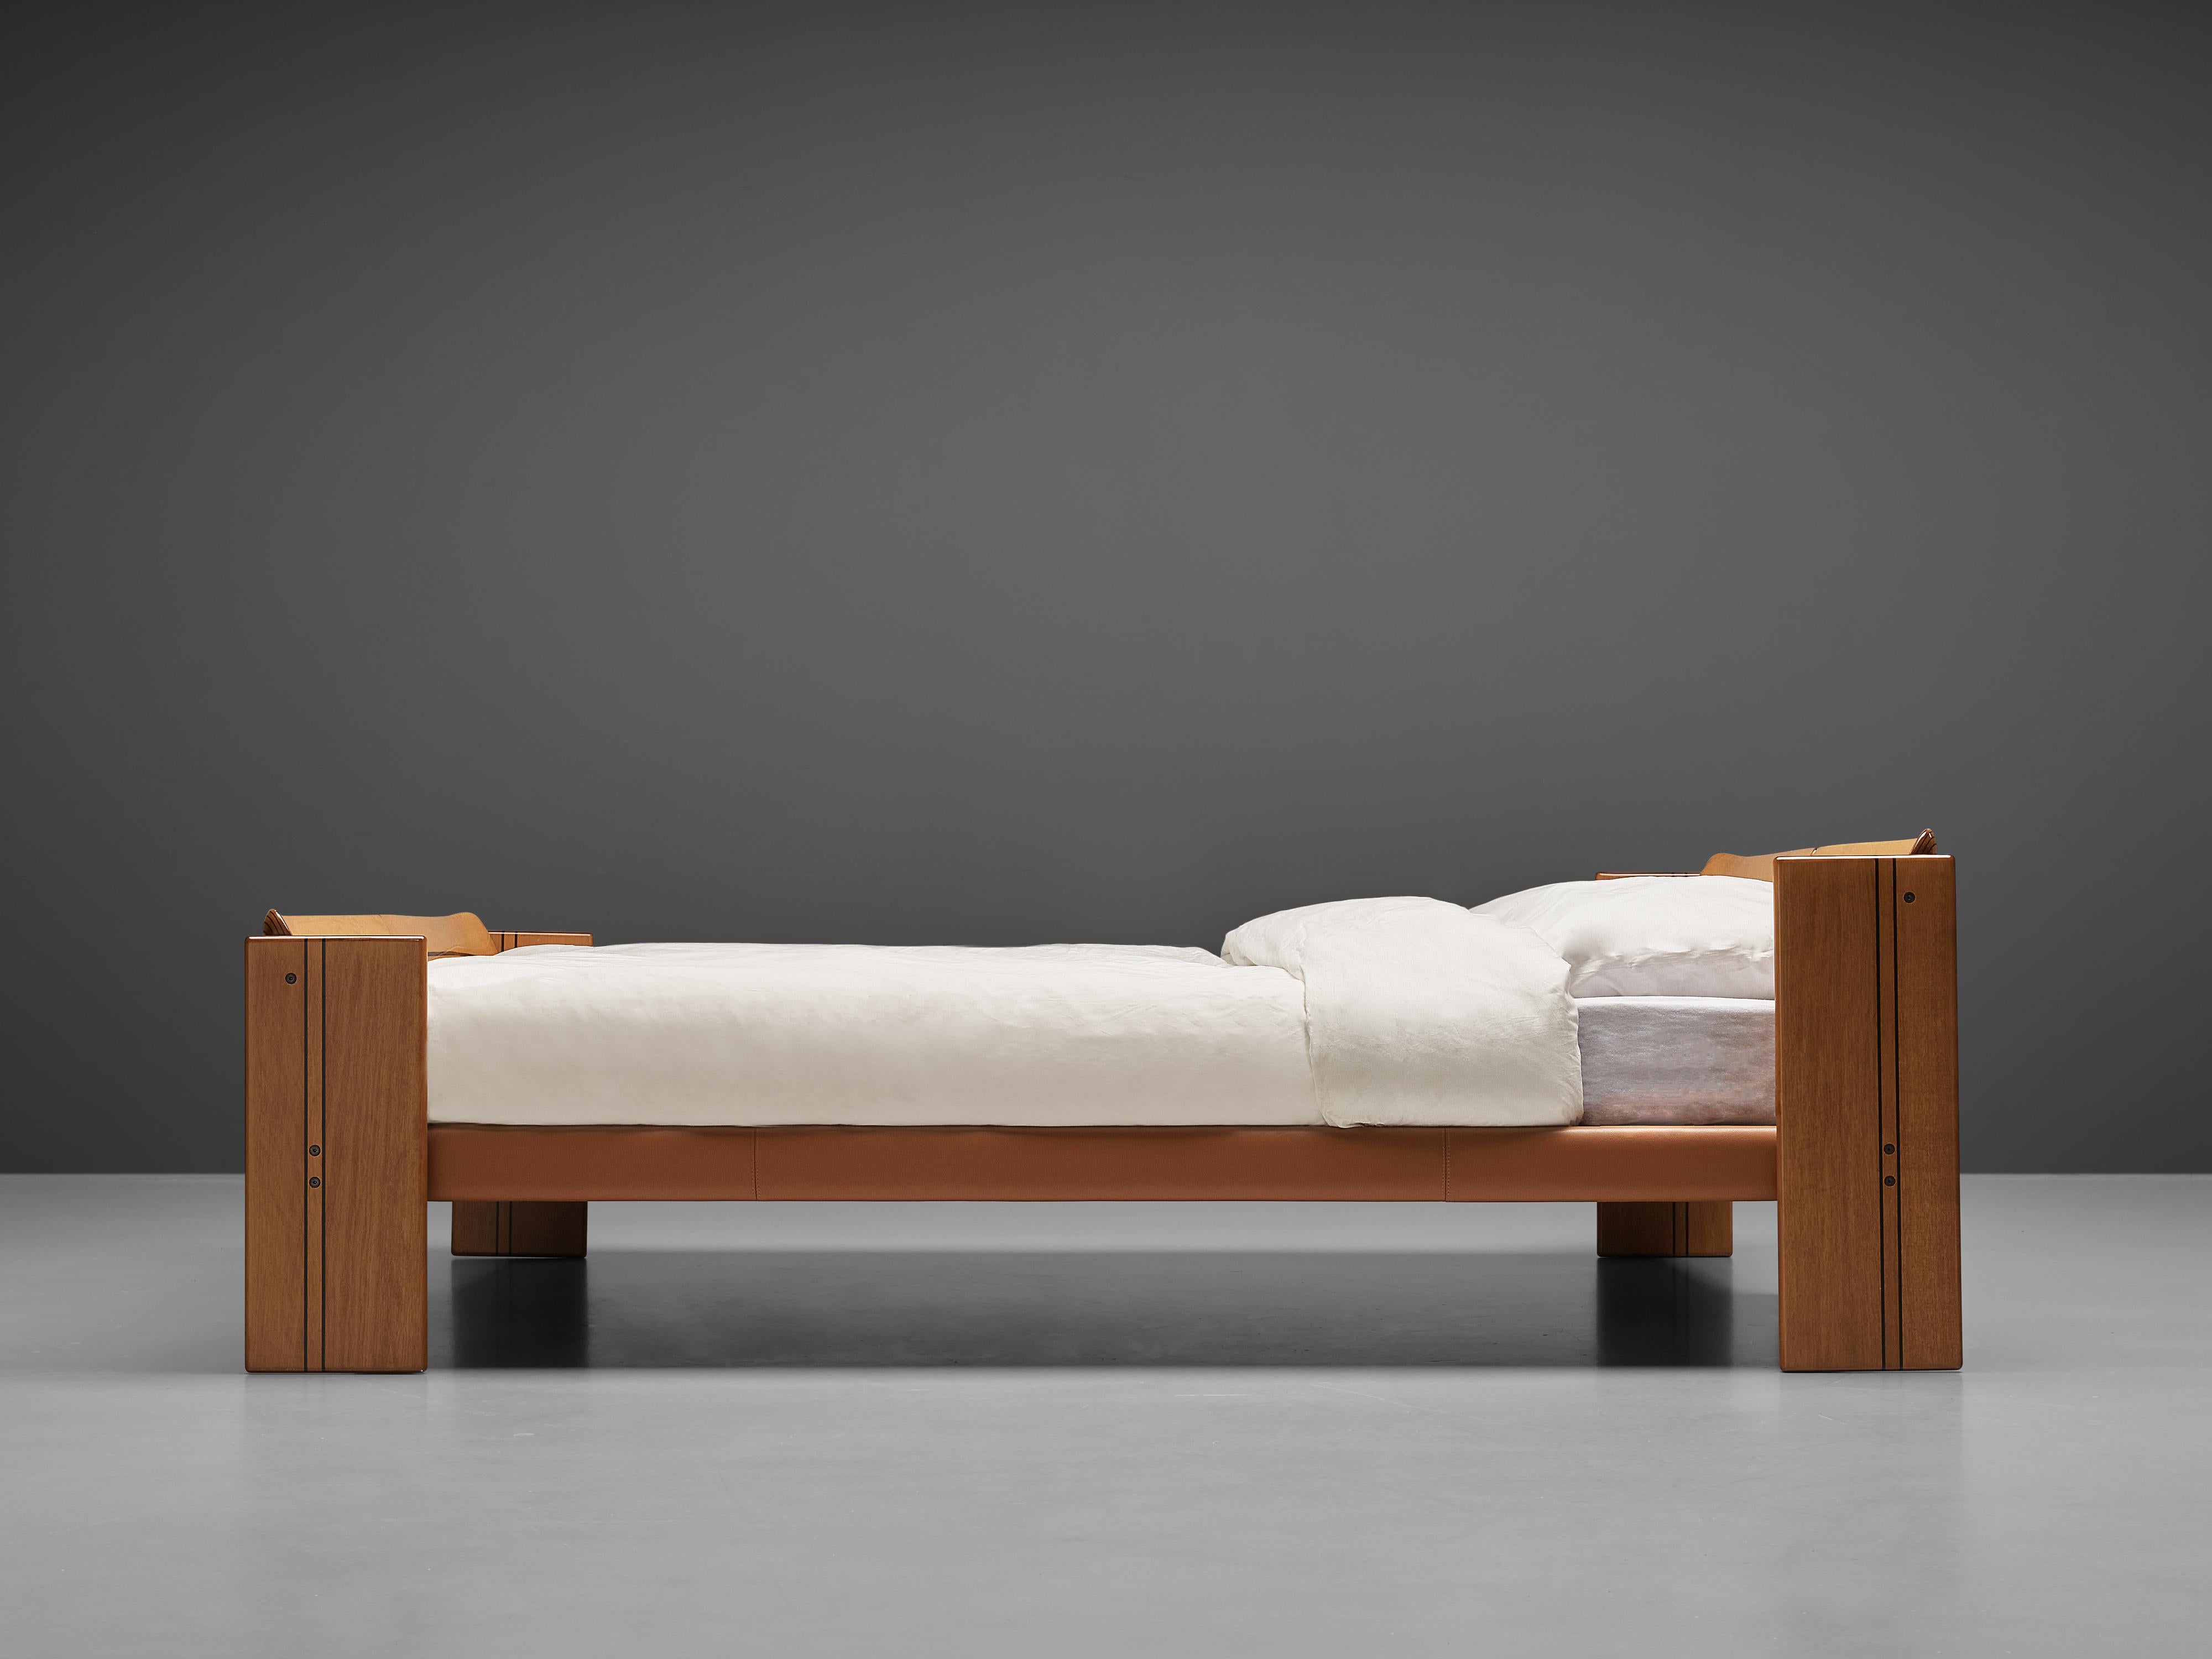 Italian Afra & Tobia Scarpa 'Artona' Bed in Walnut and Leather